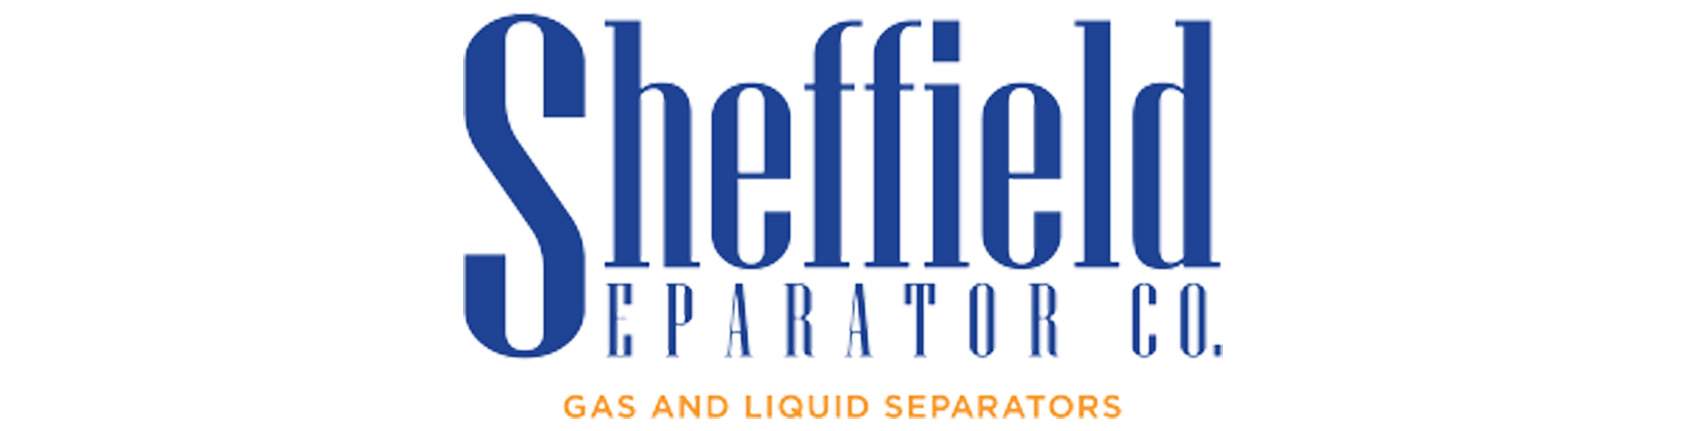 Sheffield Separator Company